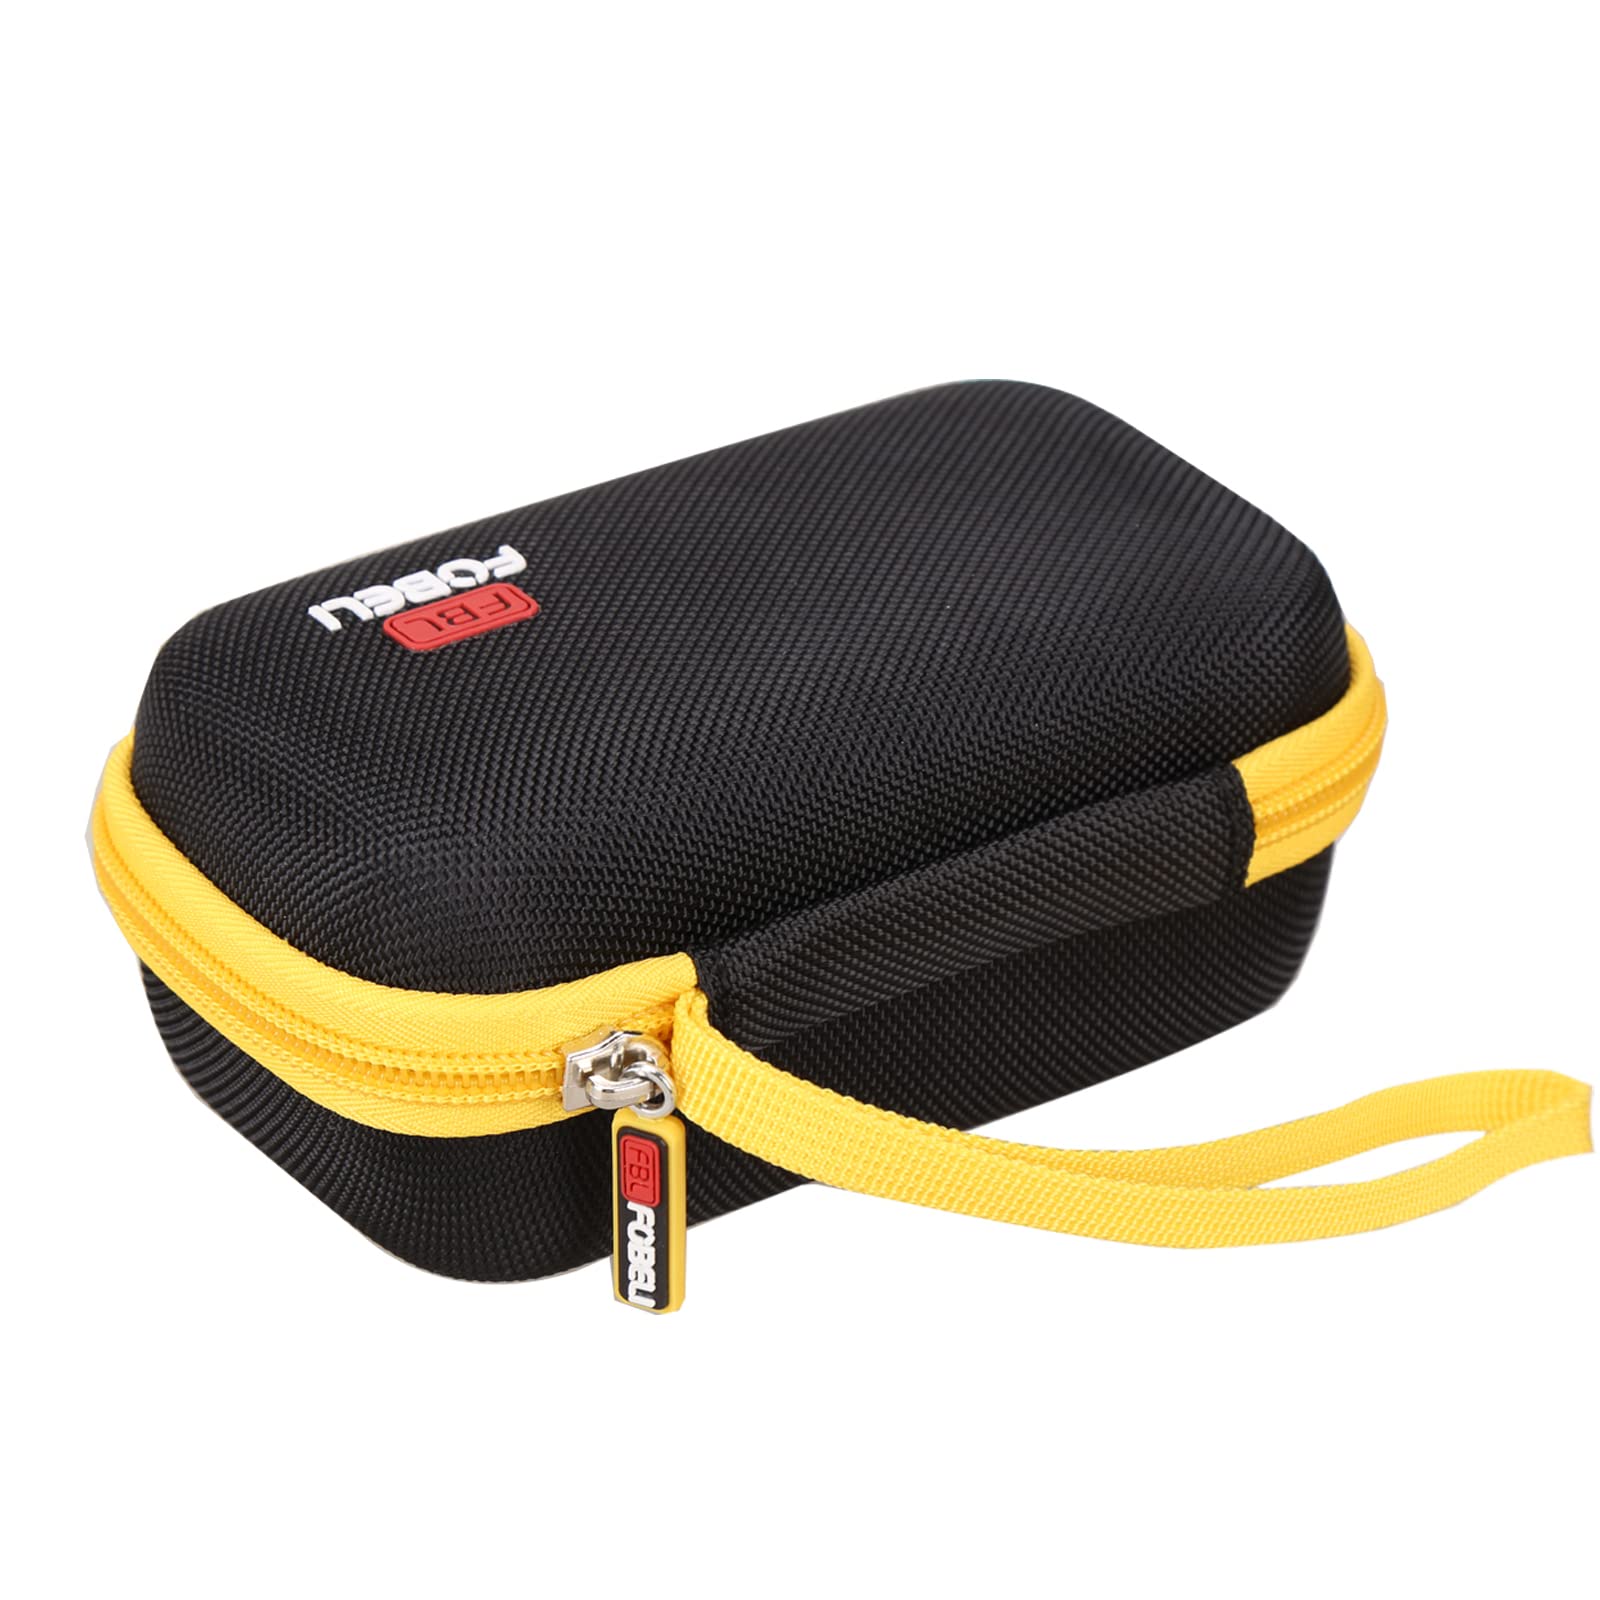 FBLFOBELI Hard Travel Carrying Case for FLUKE 101/106 / 107 Digital Multimeter, EVA Shockproof Protective Cover Storage Bag (Case Only)